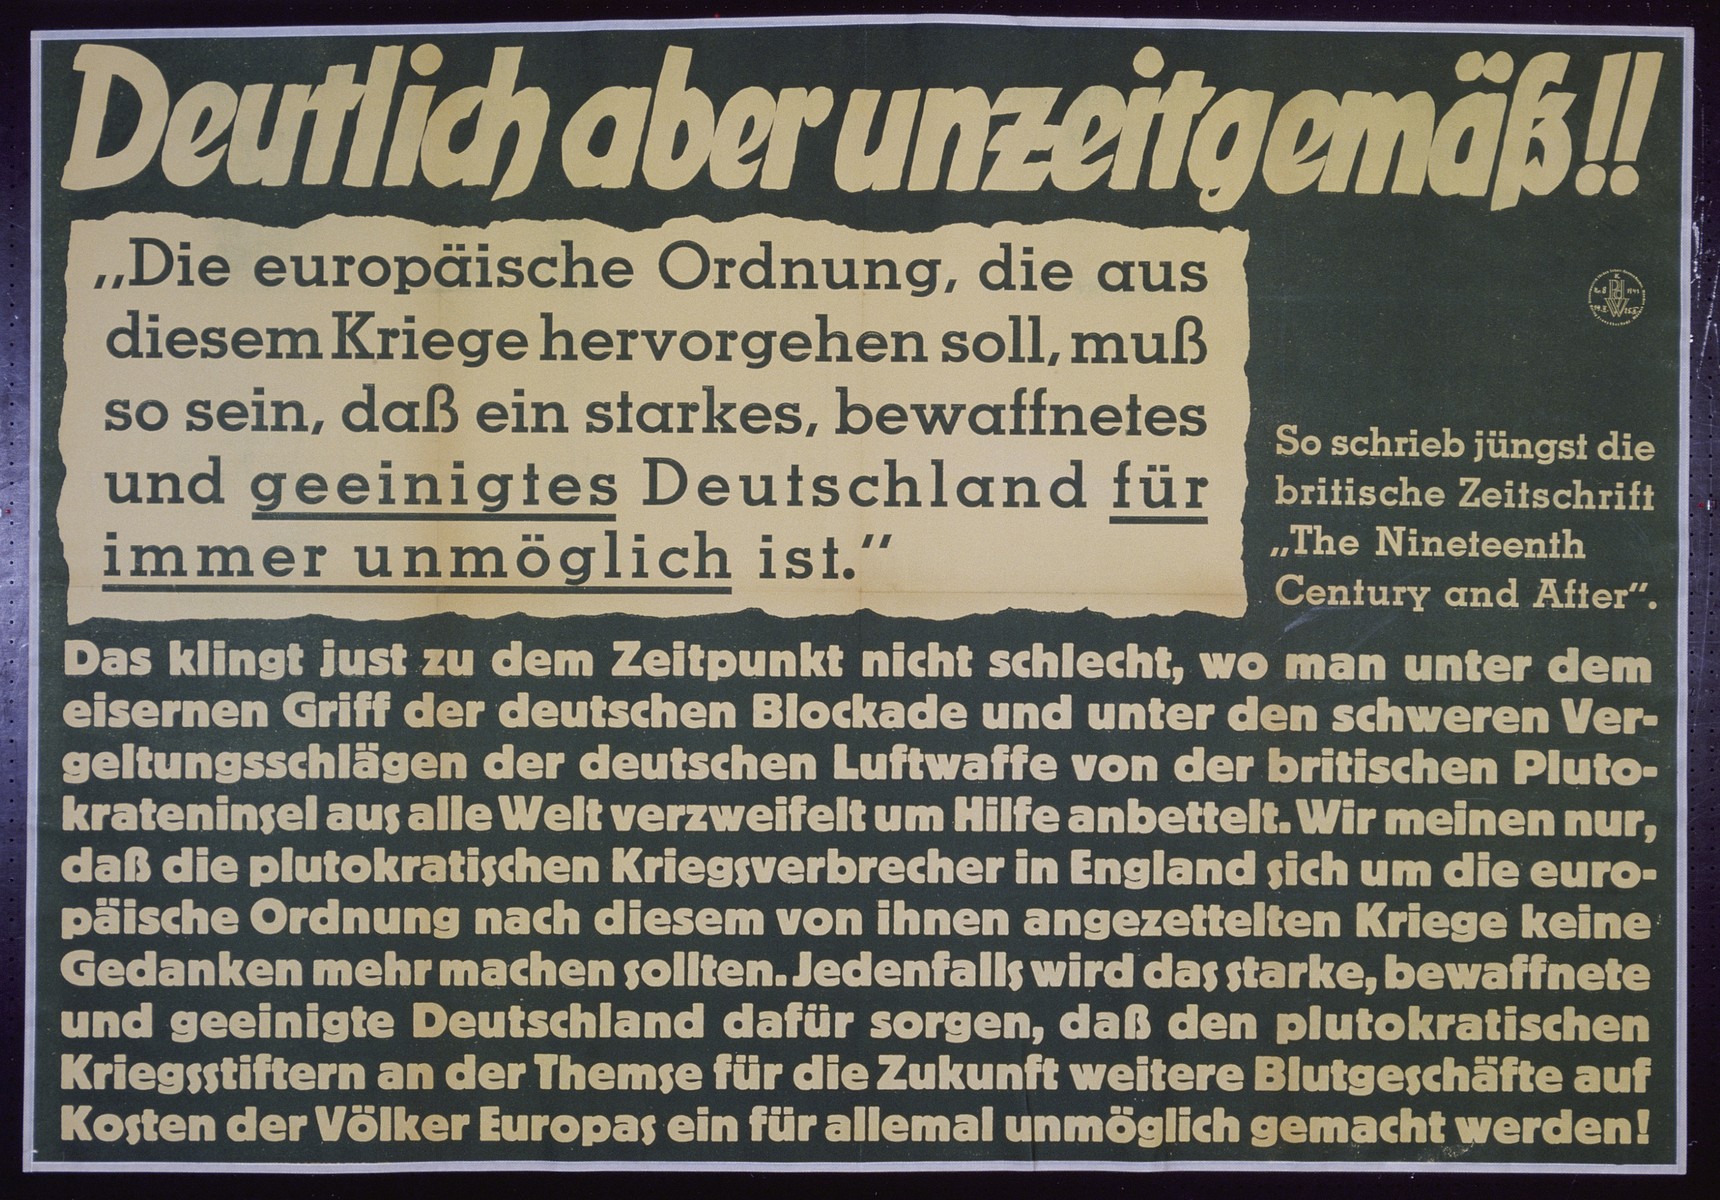 Nazi propaganda poster entitled, "Deutlich aber unzeitgemab," issued by the "Parole der Woche," a wall newspaper (Wandzeitung) published by the National Socialist Party propaganda office in Munich.